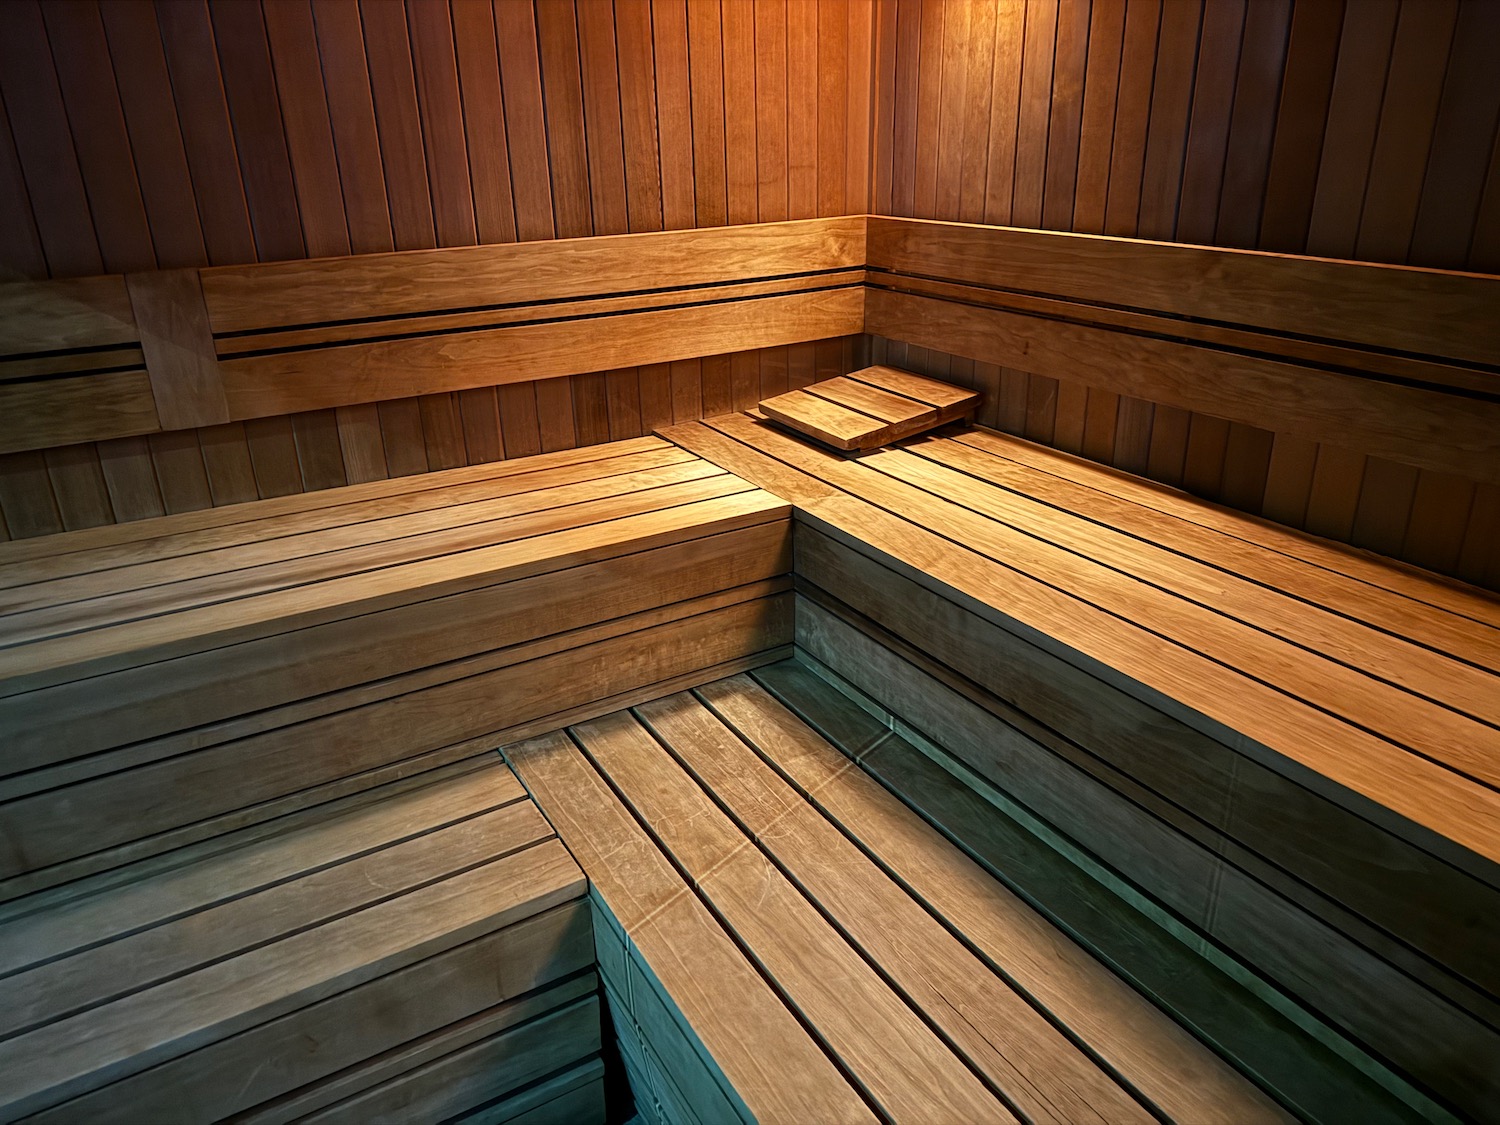 a wooden bench in a sauna